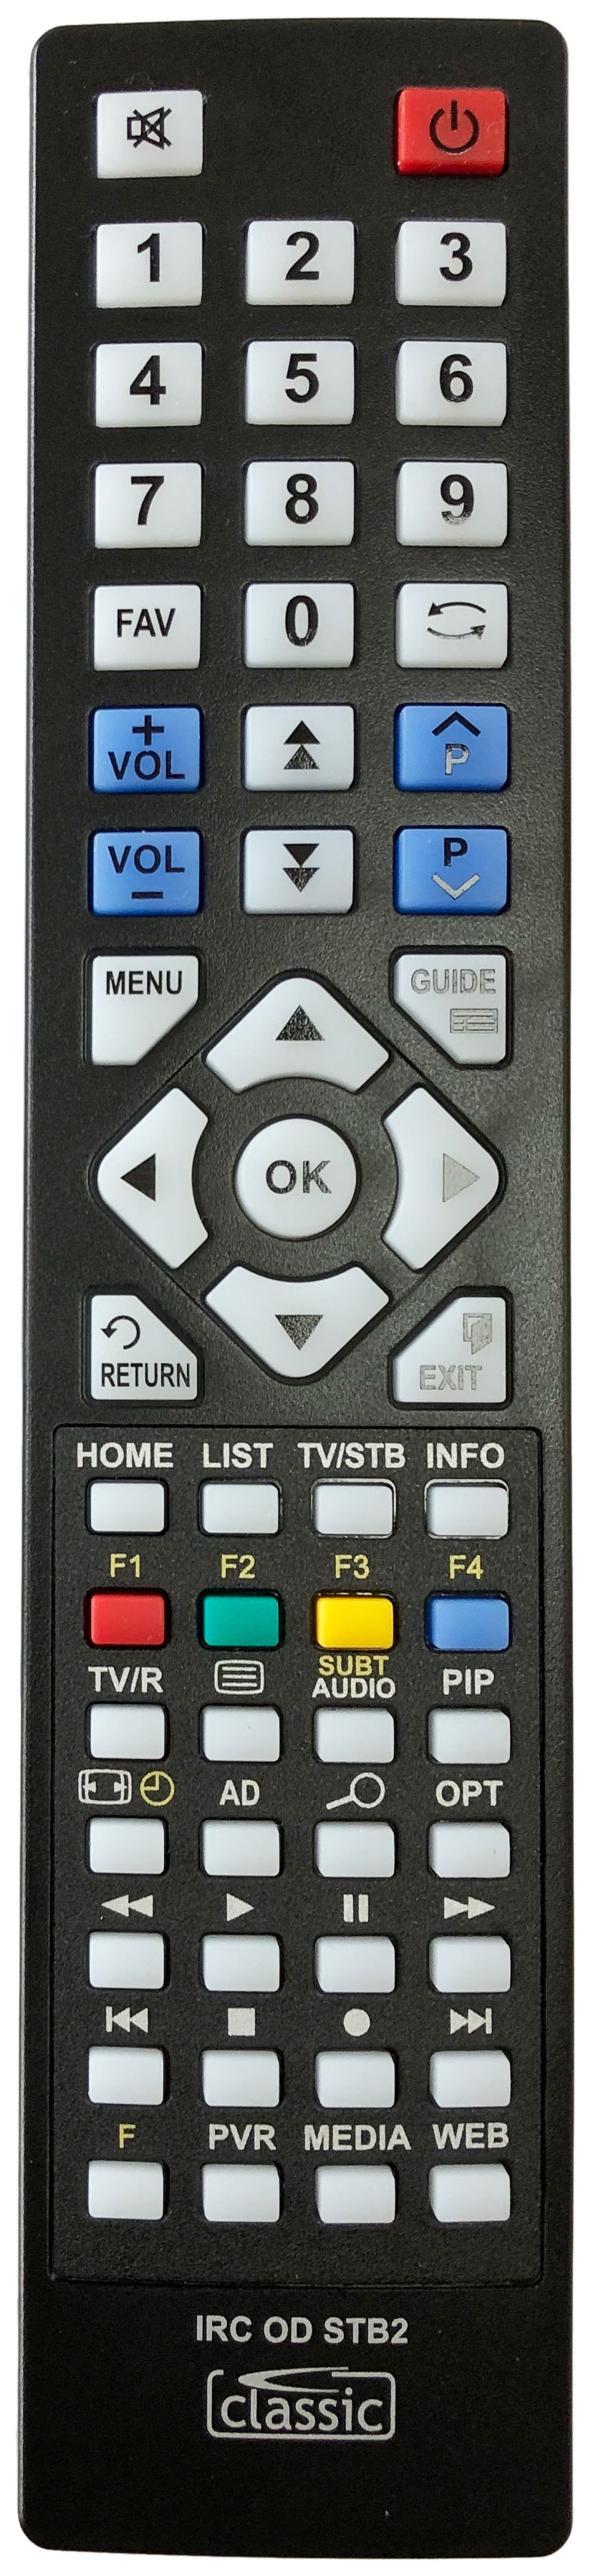 AKURA AVX665 Remote Control